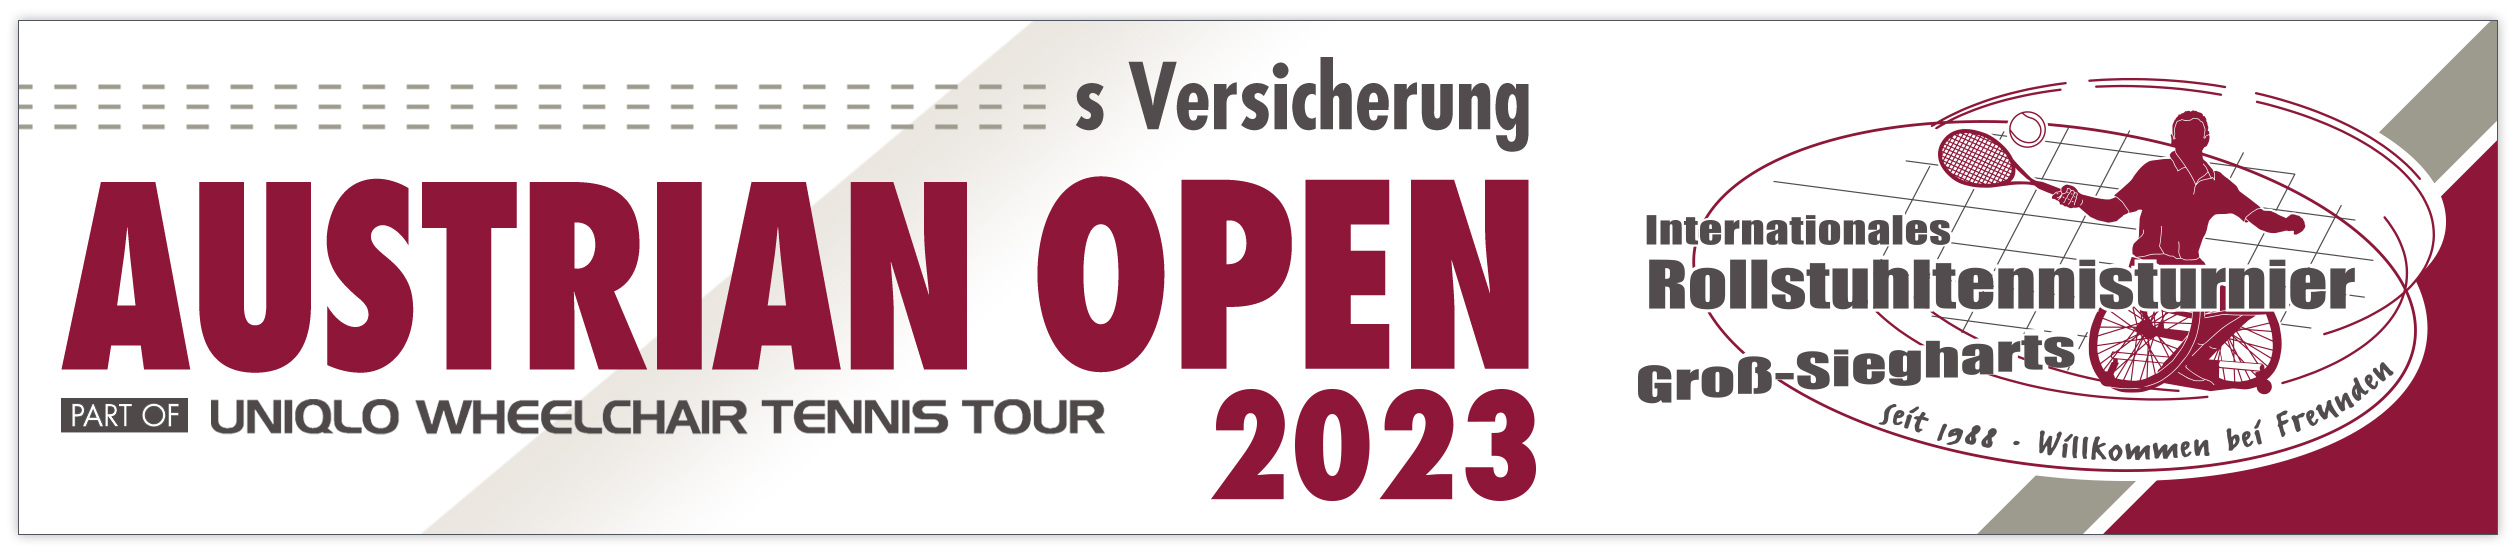 Header Bild Austrian Open 2023